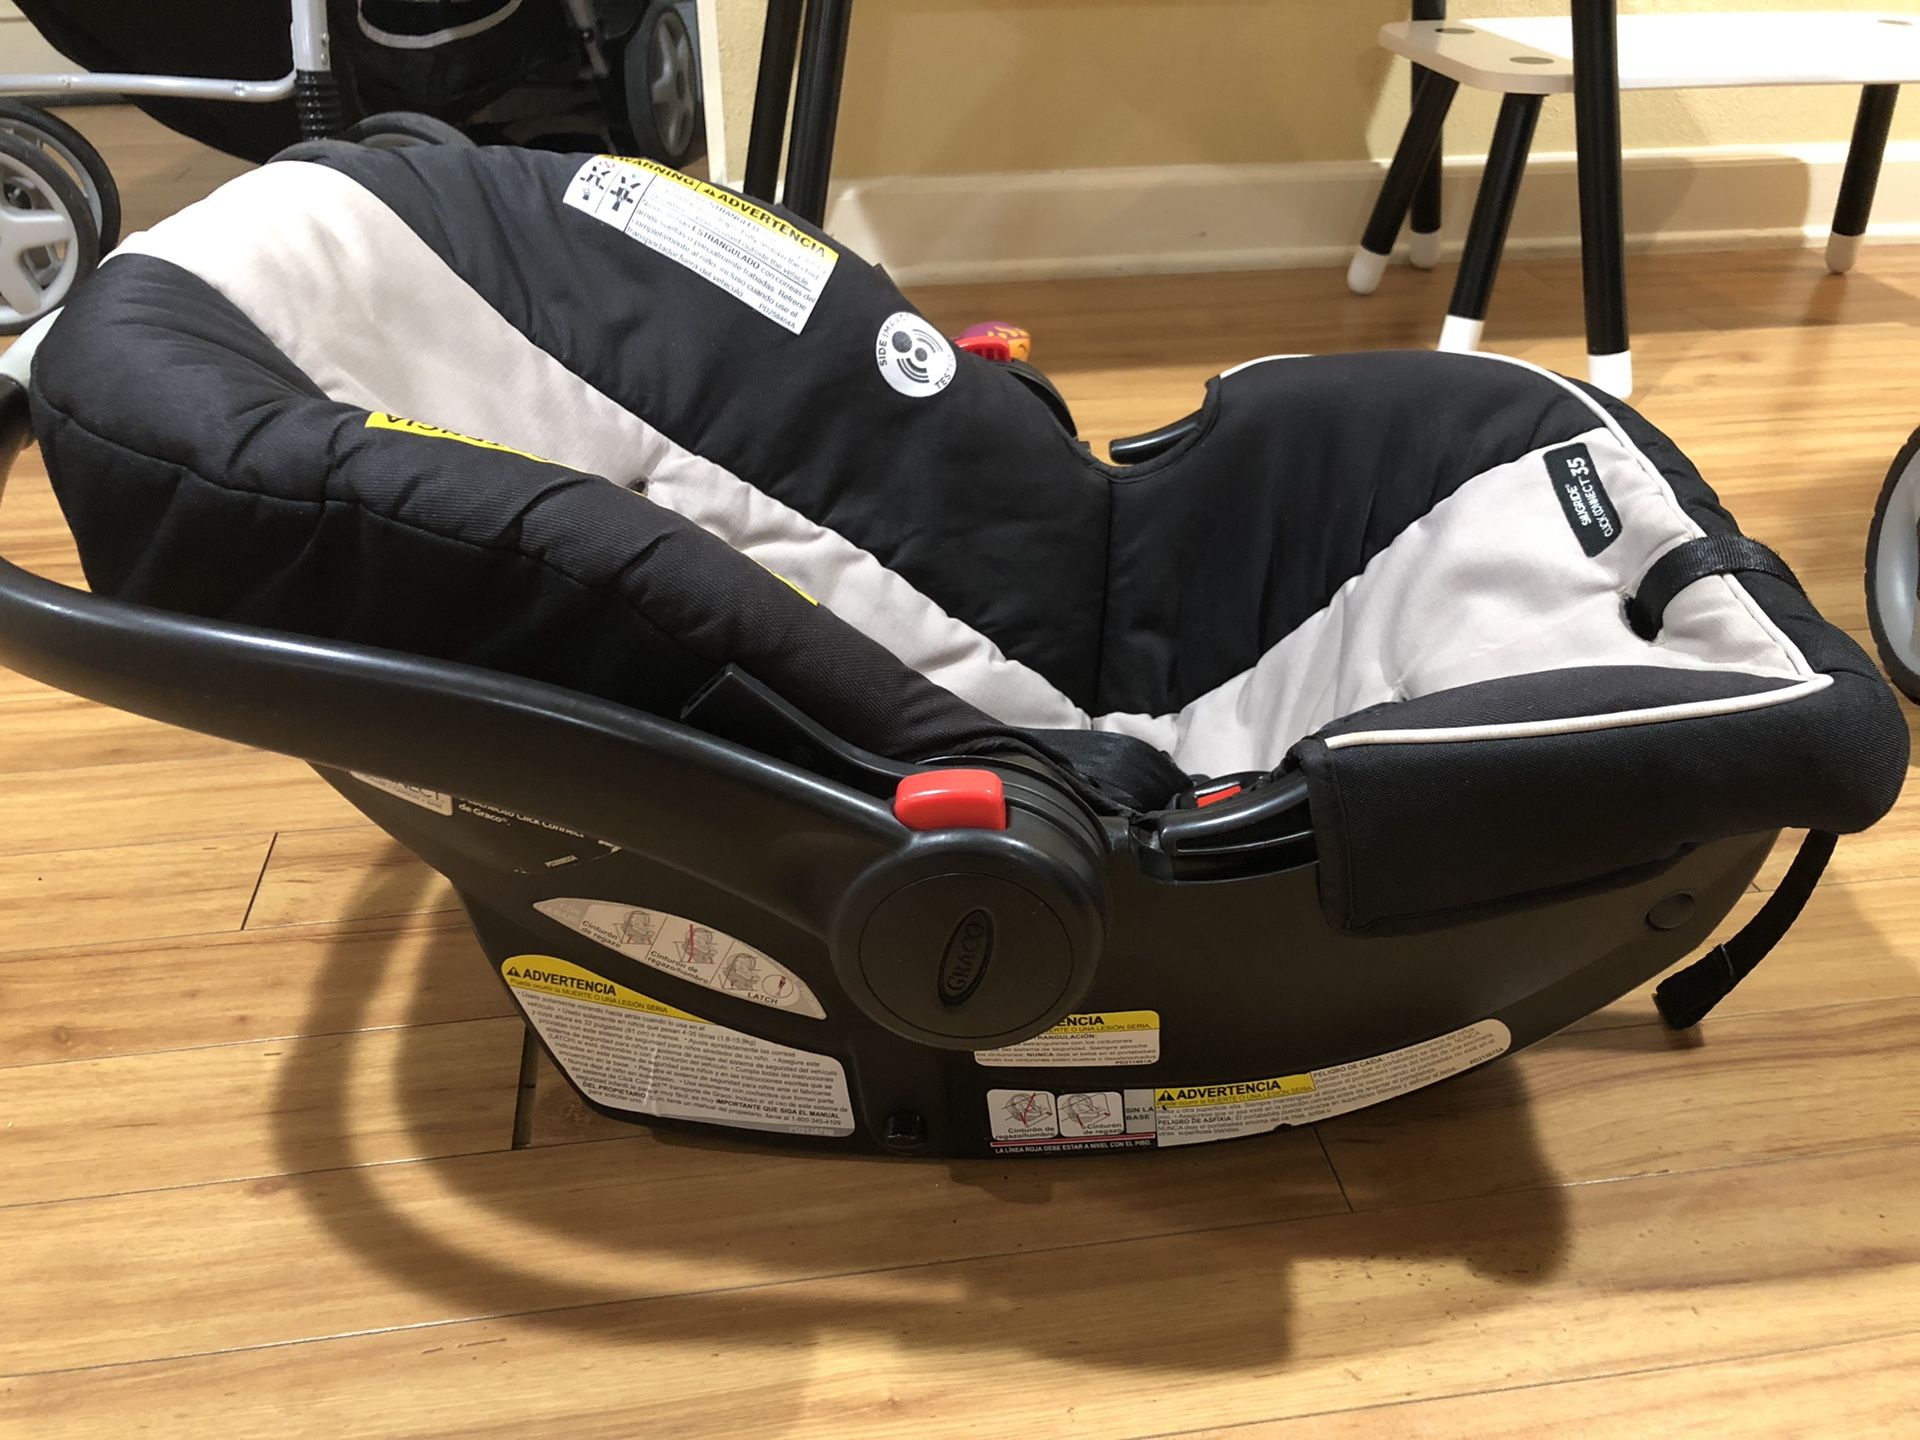 Graco stroller + car seat + car seat base